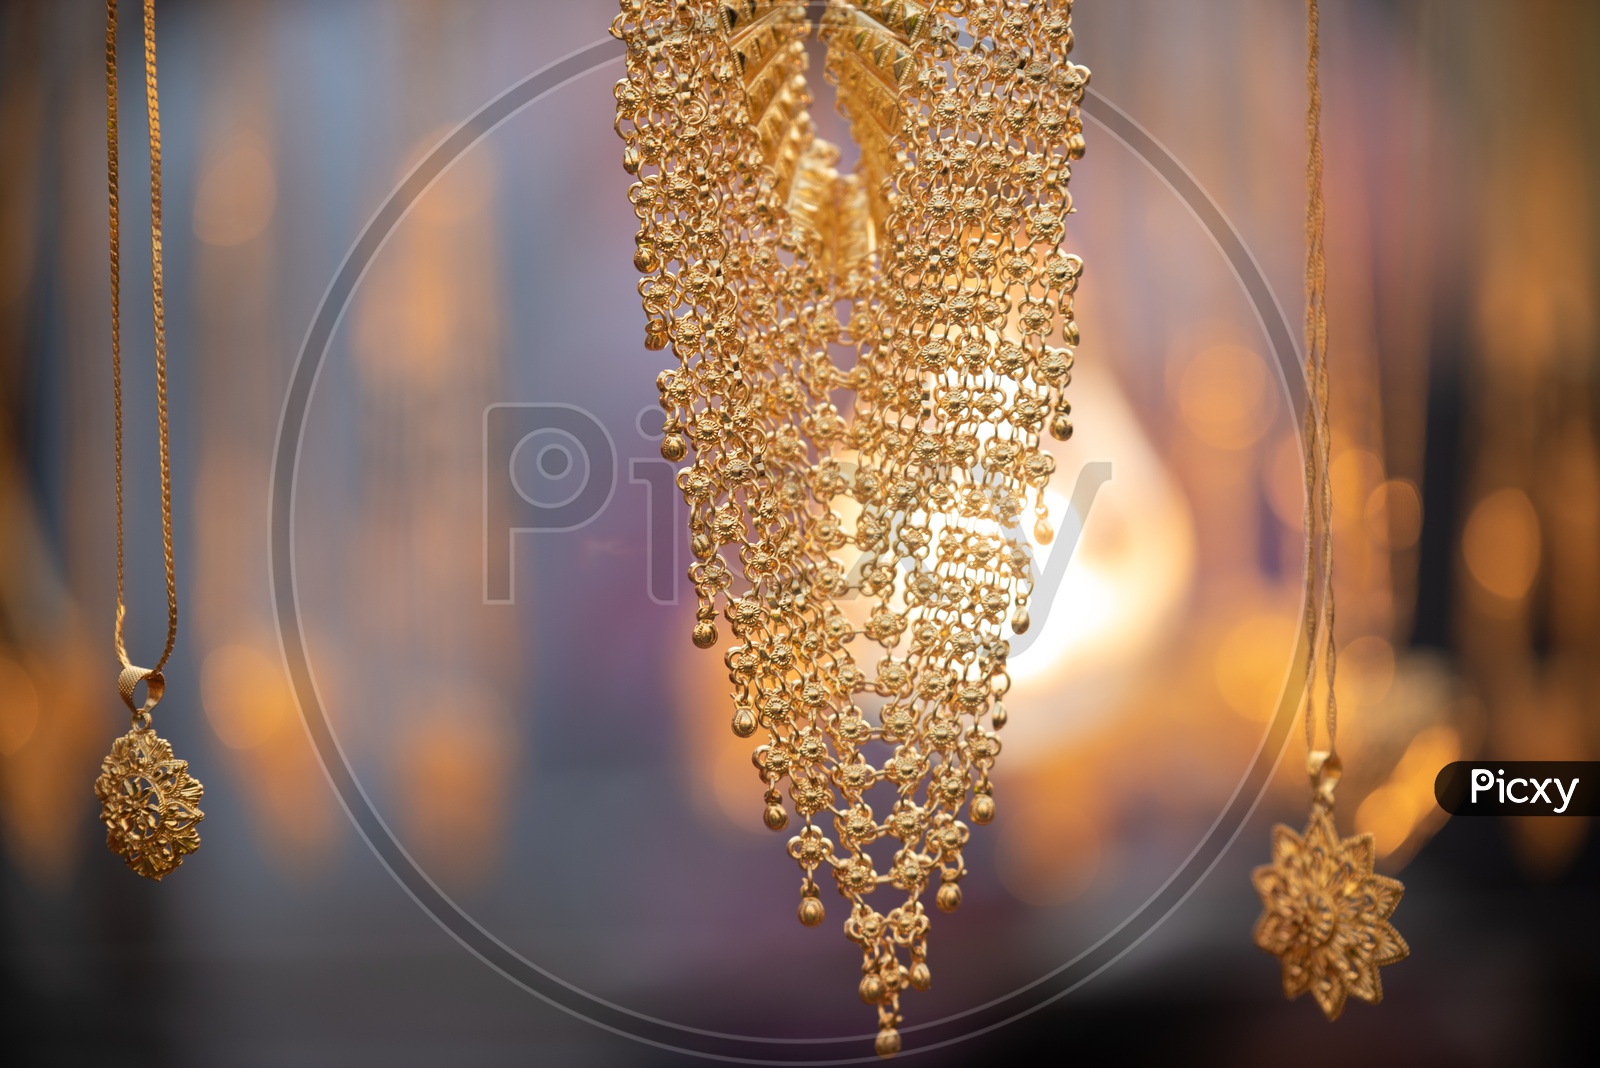 Necklace Or  Imitation  Jewellery   In Display At  Vendor Stalls  Around Charminar   During  Ramadan or Ramzan Season